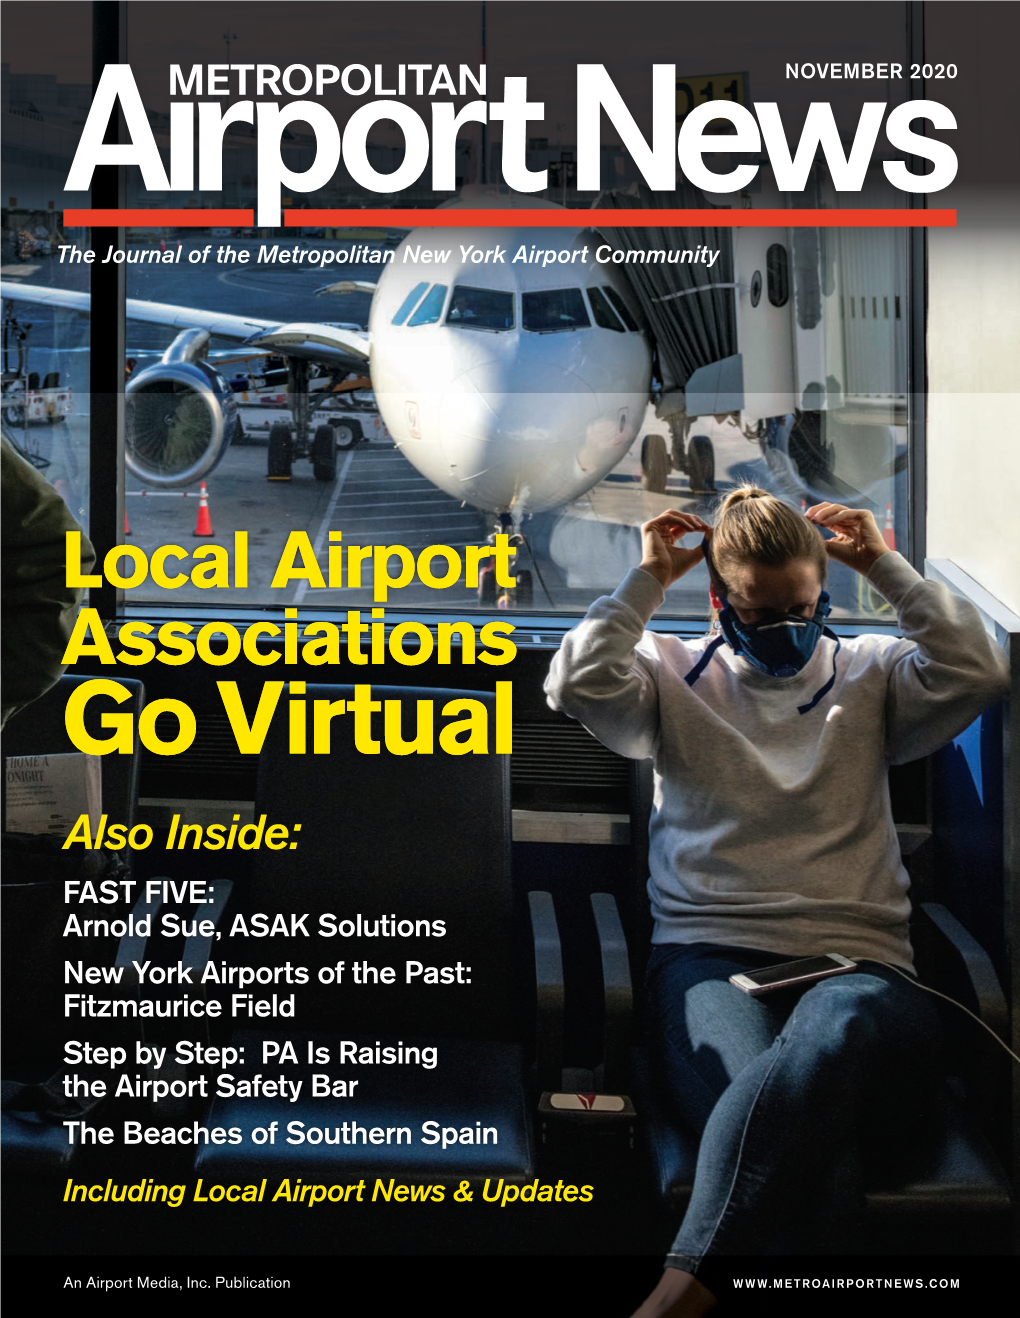 Local Airport Associations Go Virtual